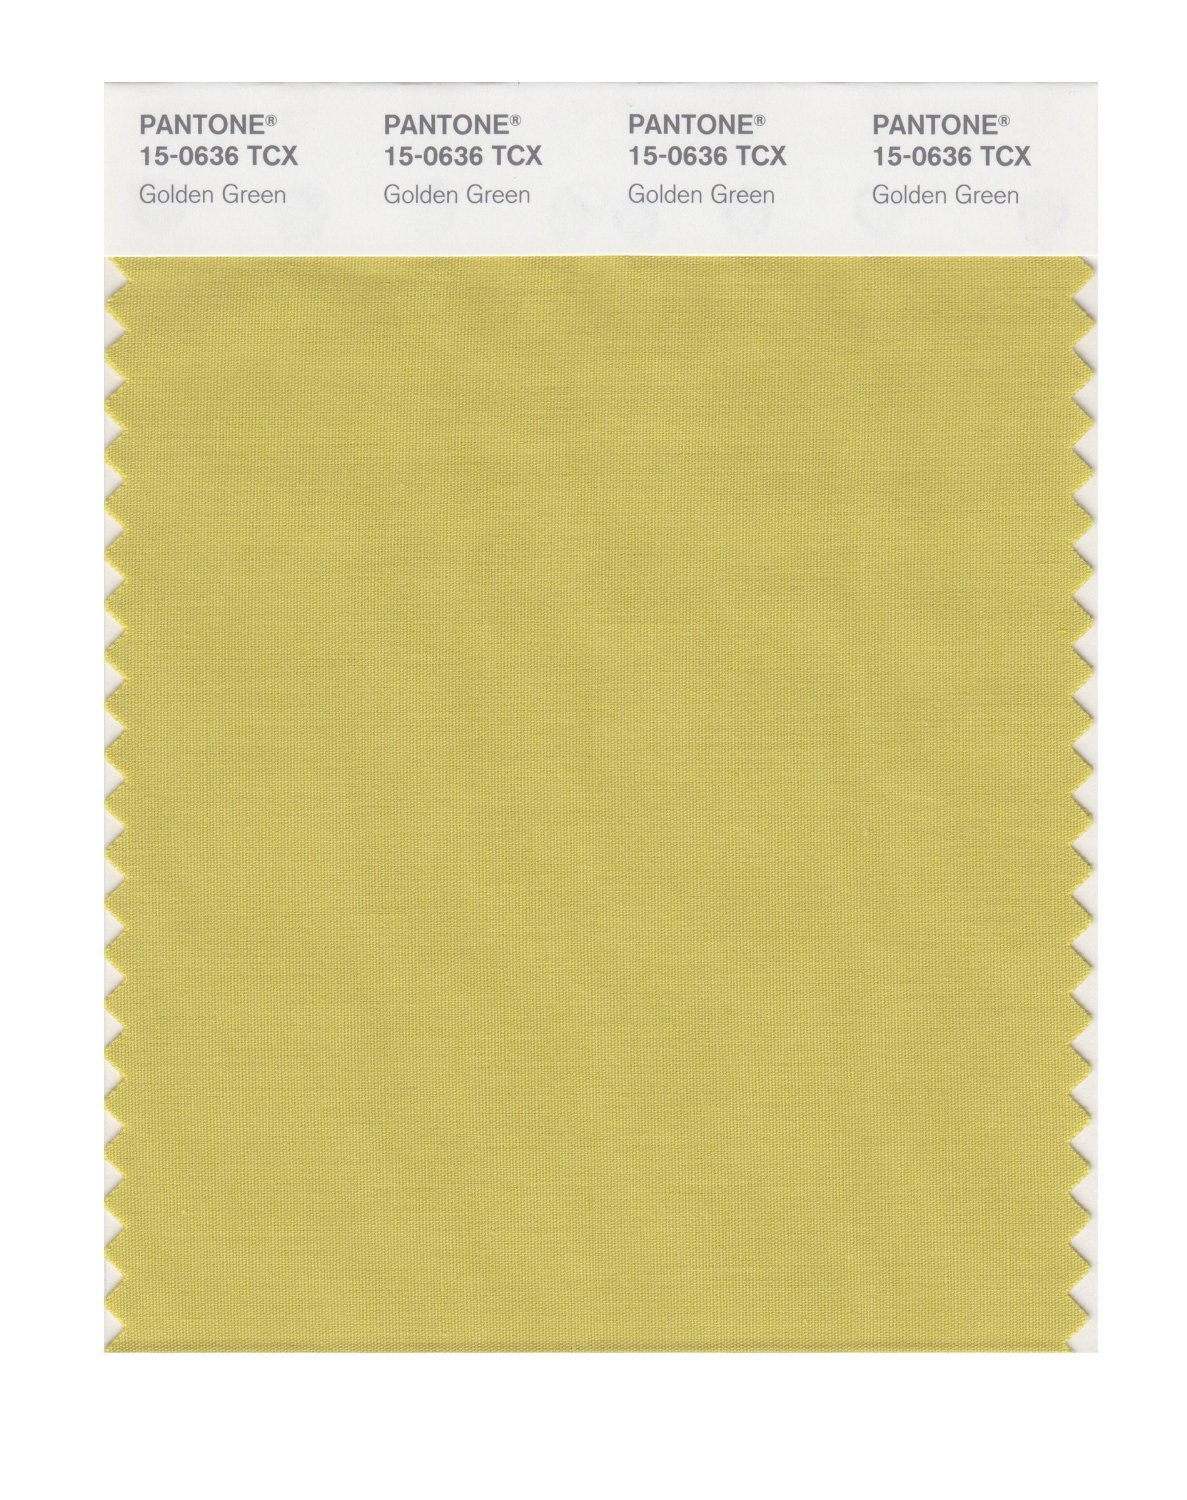 Pantone Cotton Swatch 15-0636 Golden Green